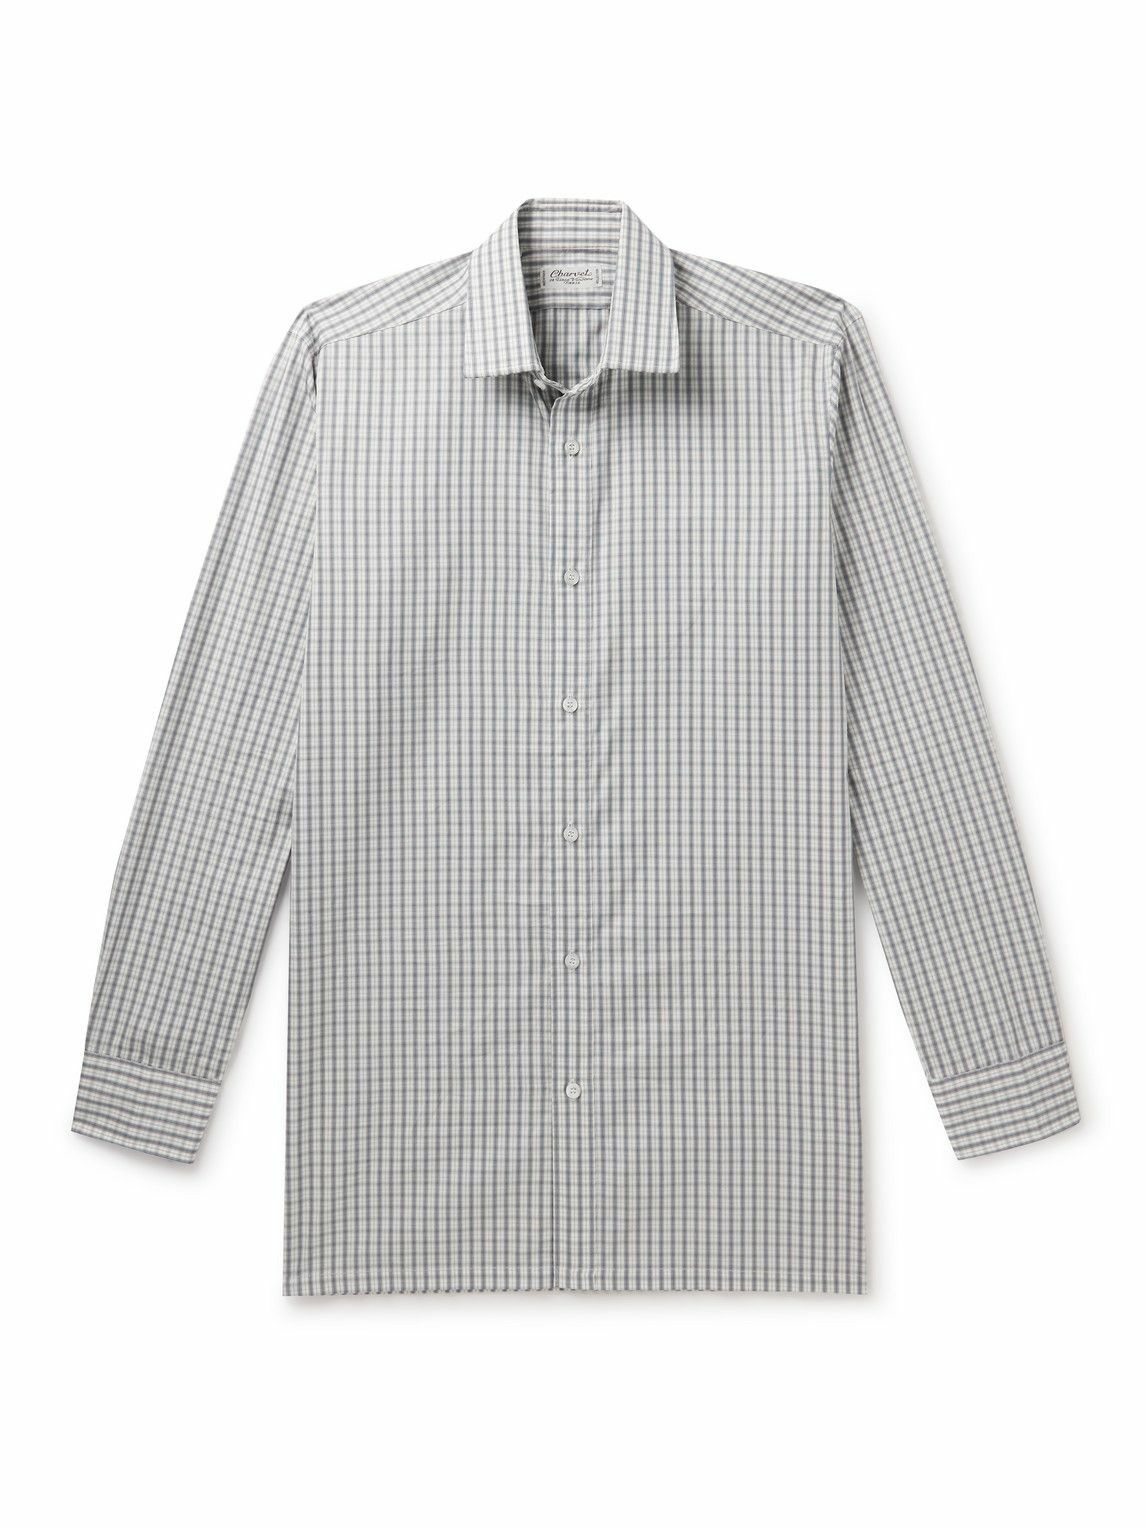 Photo: Charvet - Checked Cotton-Poplin Shirt - Gray